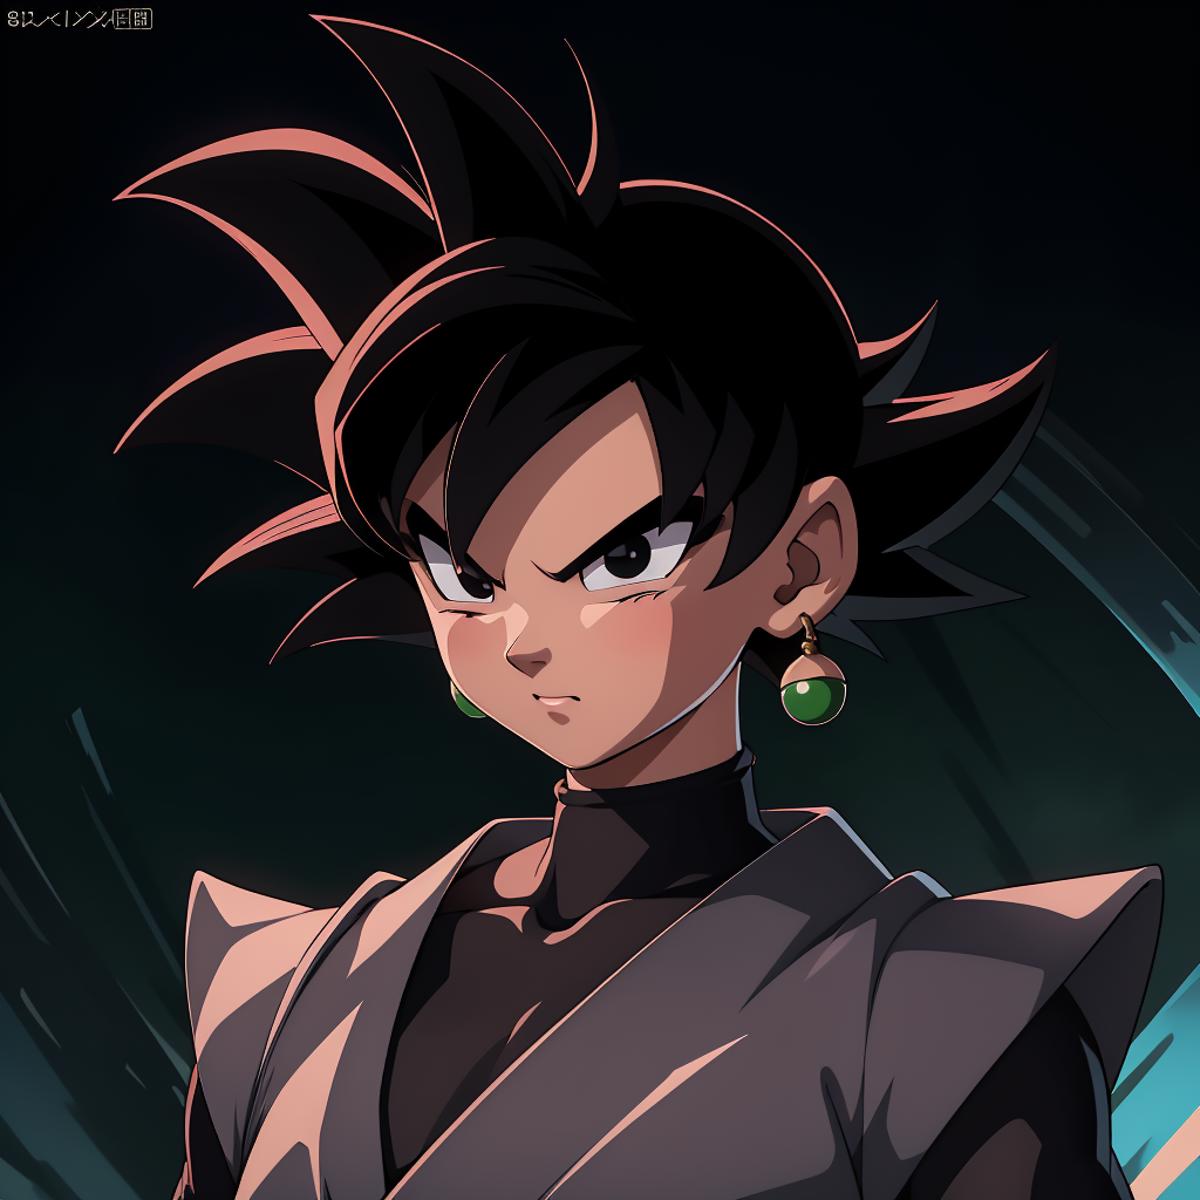 Goku Black image by infamous__fish